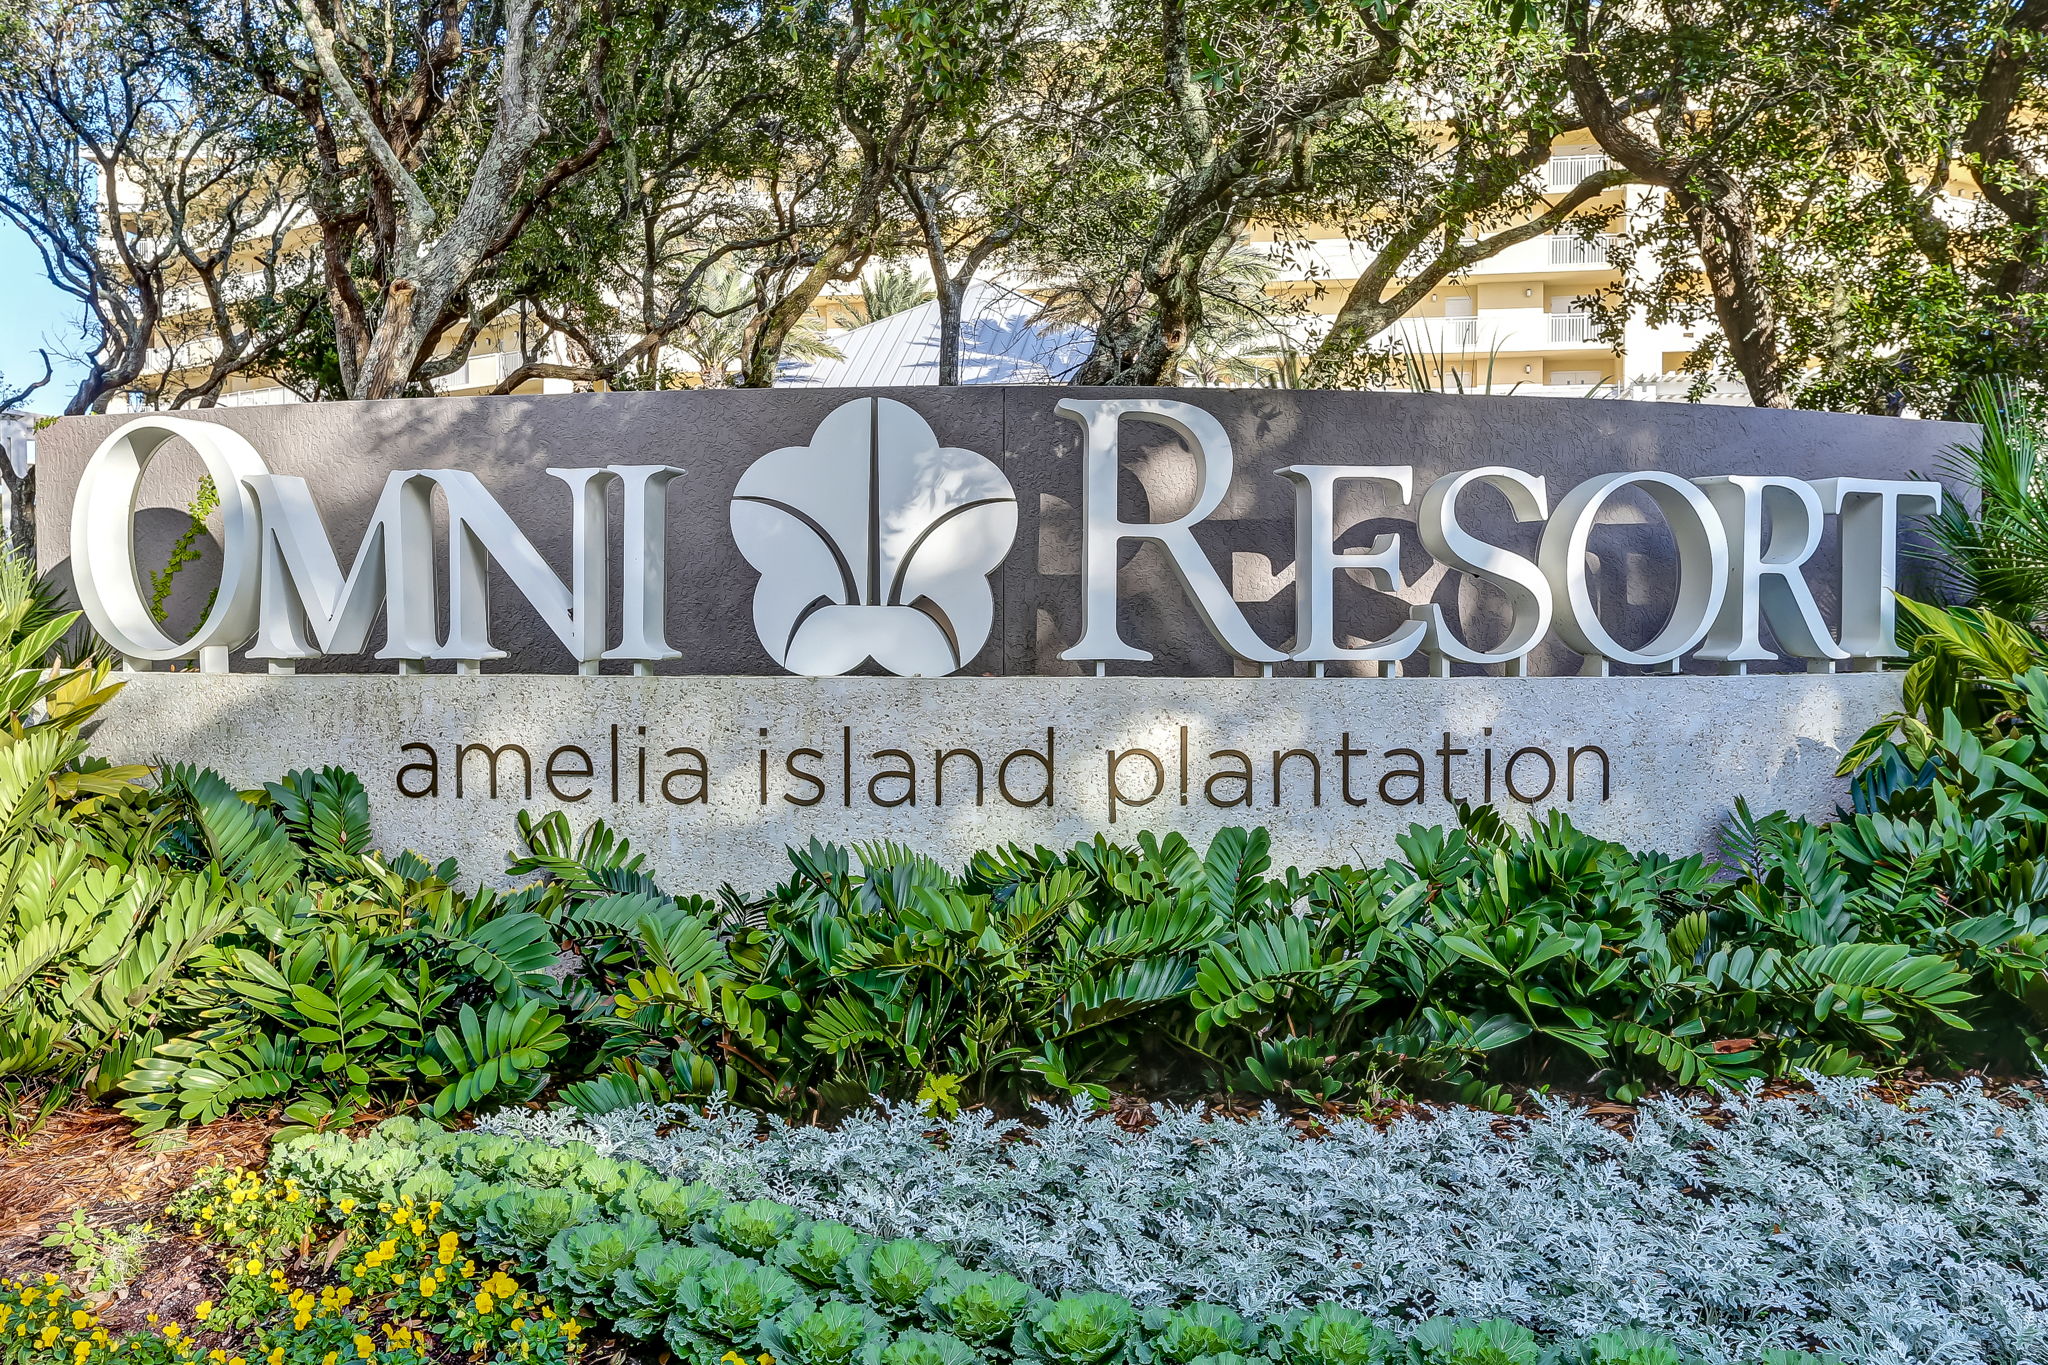 Omni Resort - Amelia Island Plantation